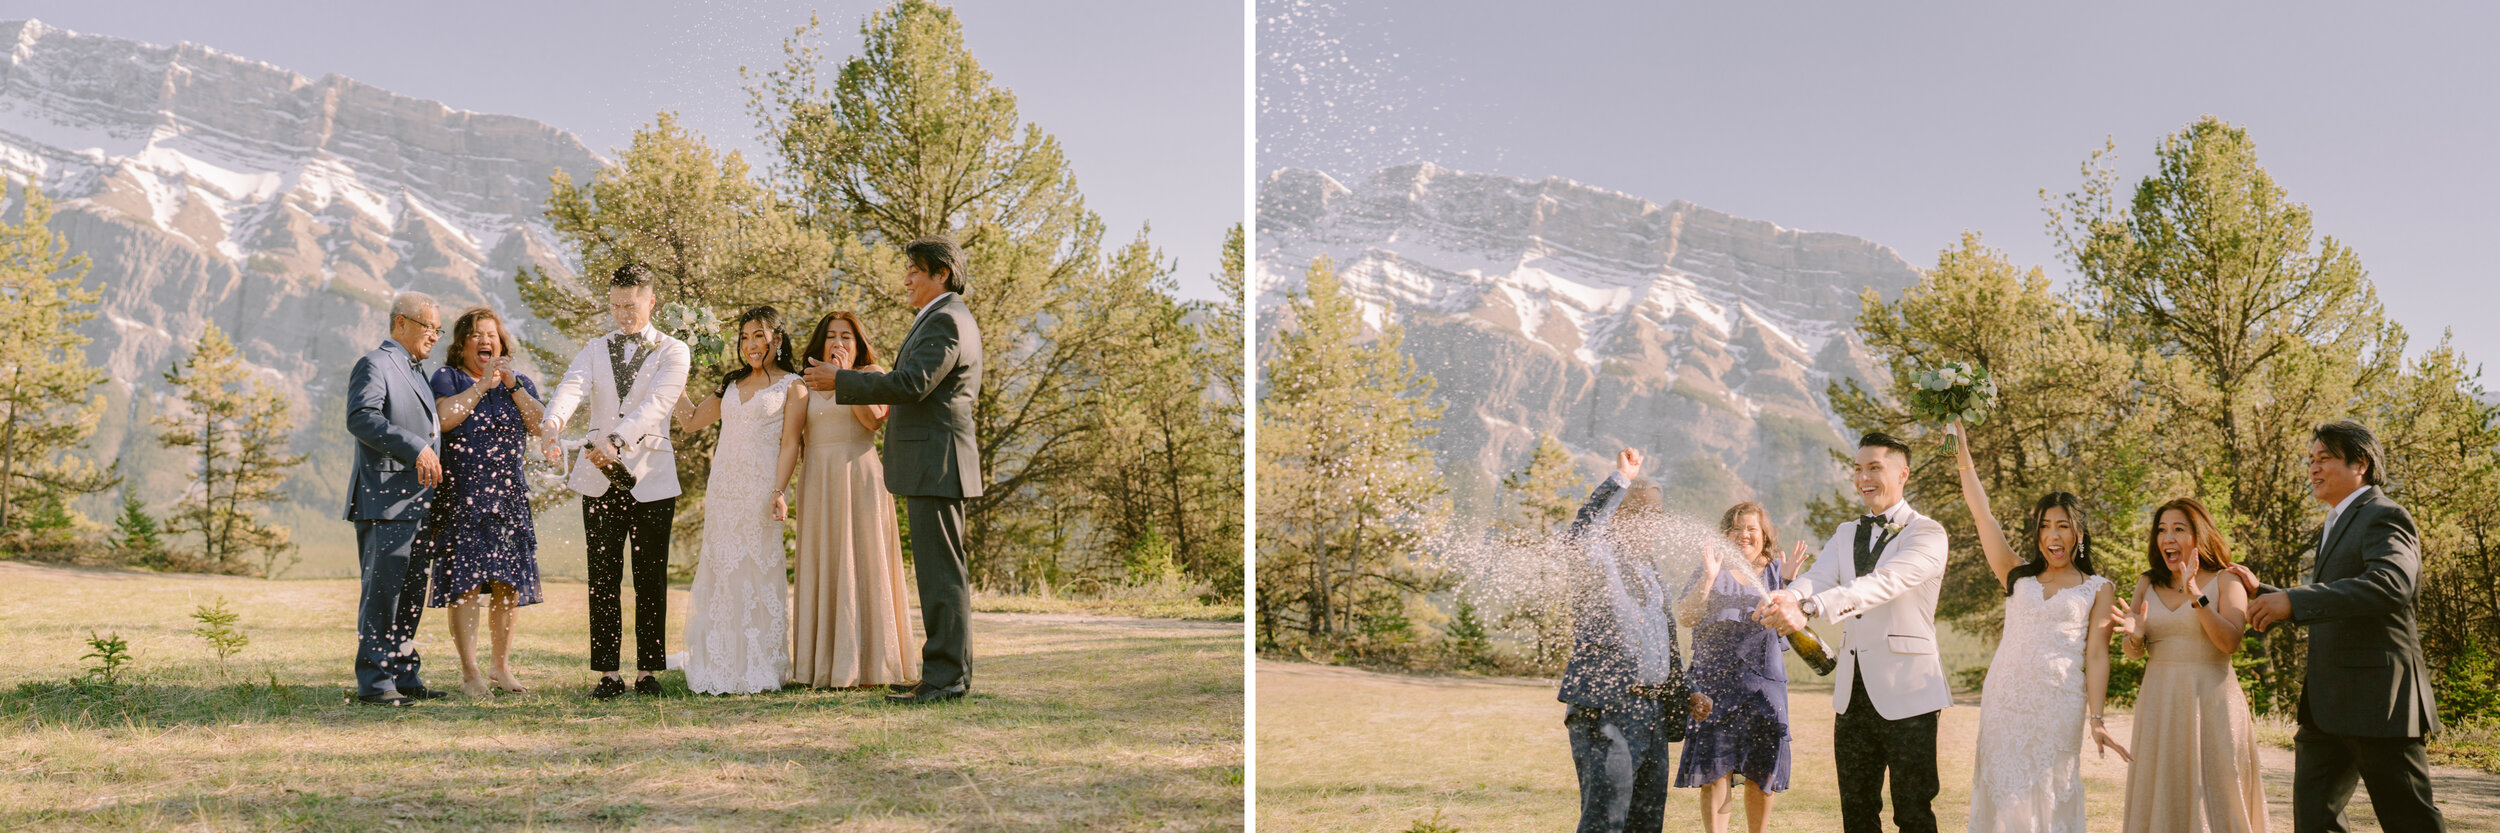 Banff-wedding-photographer-6.jpg